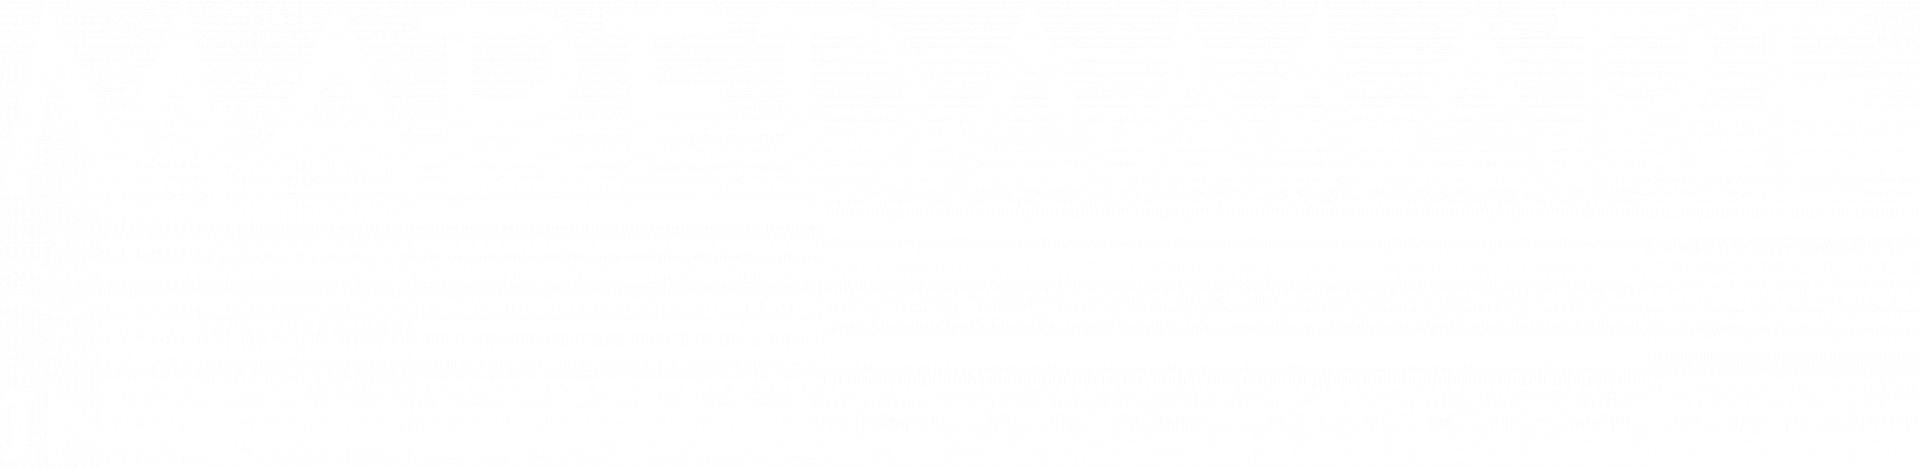 Maredamare - International Beachwear Fair